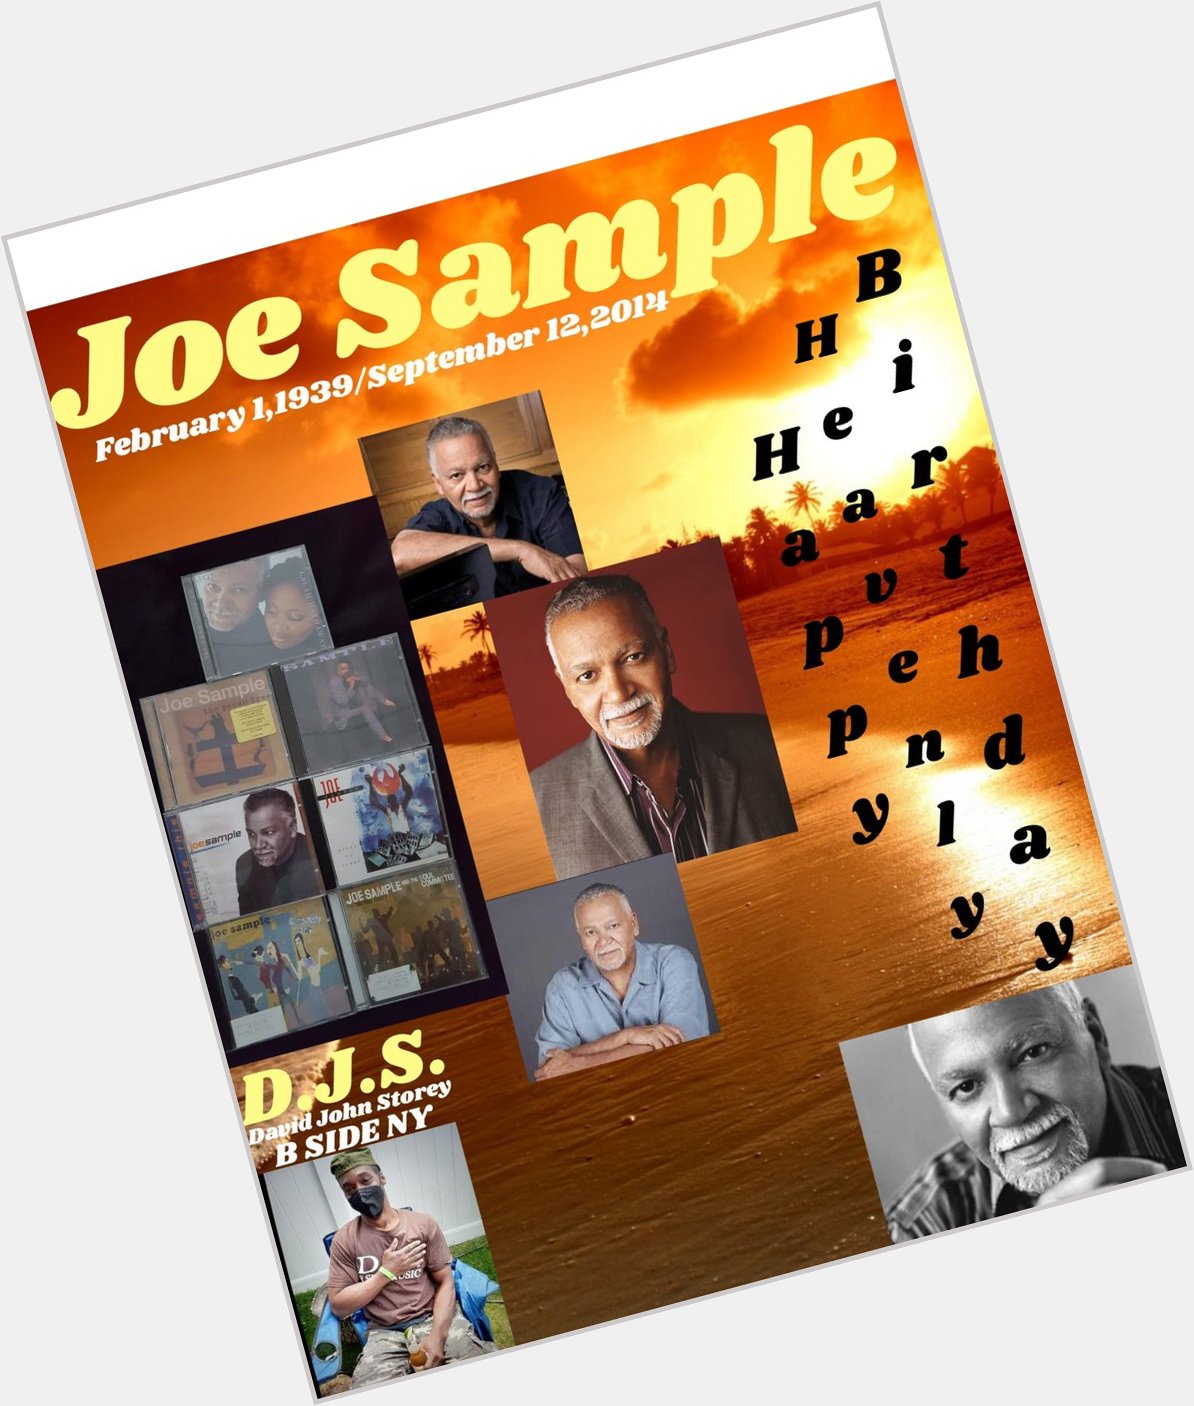 I(D.J.S.)\"B SIDE\" taking time to say Happy Heavenly Birthday to Jazz Musician: \"JOE SAMPLE\". 